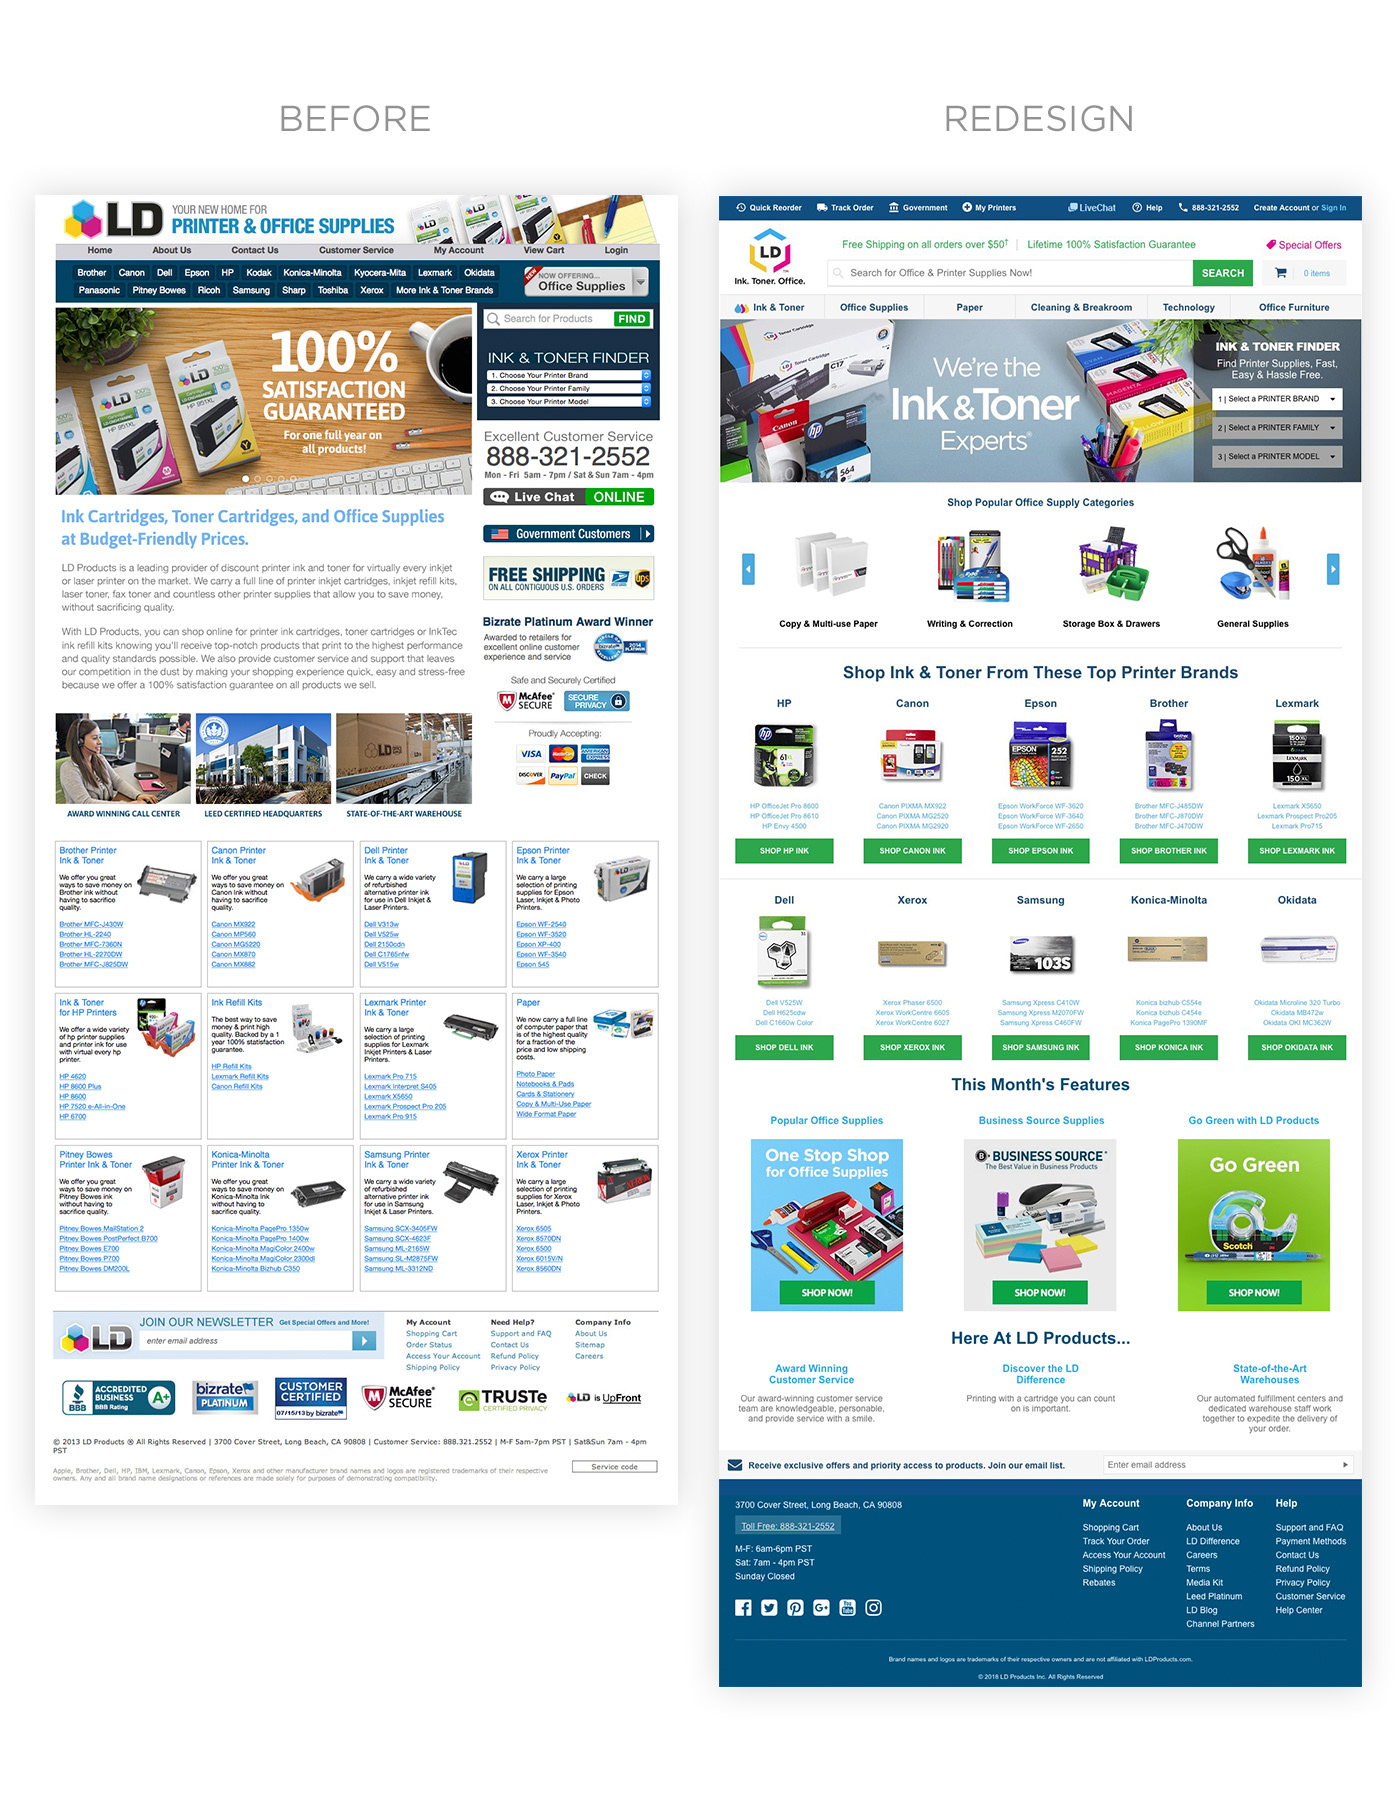 Website Ecommerce branding  redesign refresh ux UI UserInterface user experience e-commerce